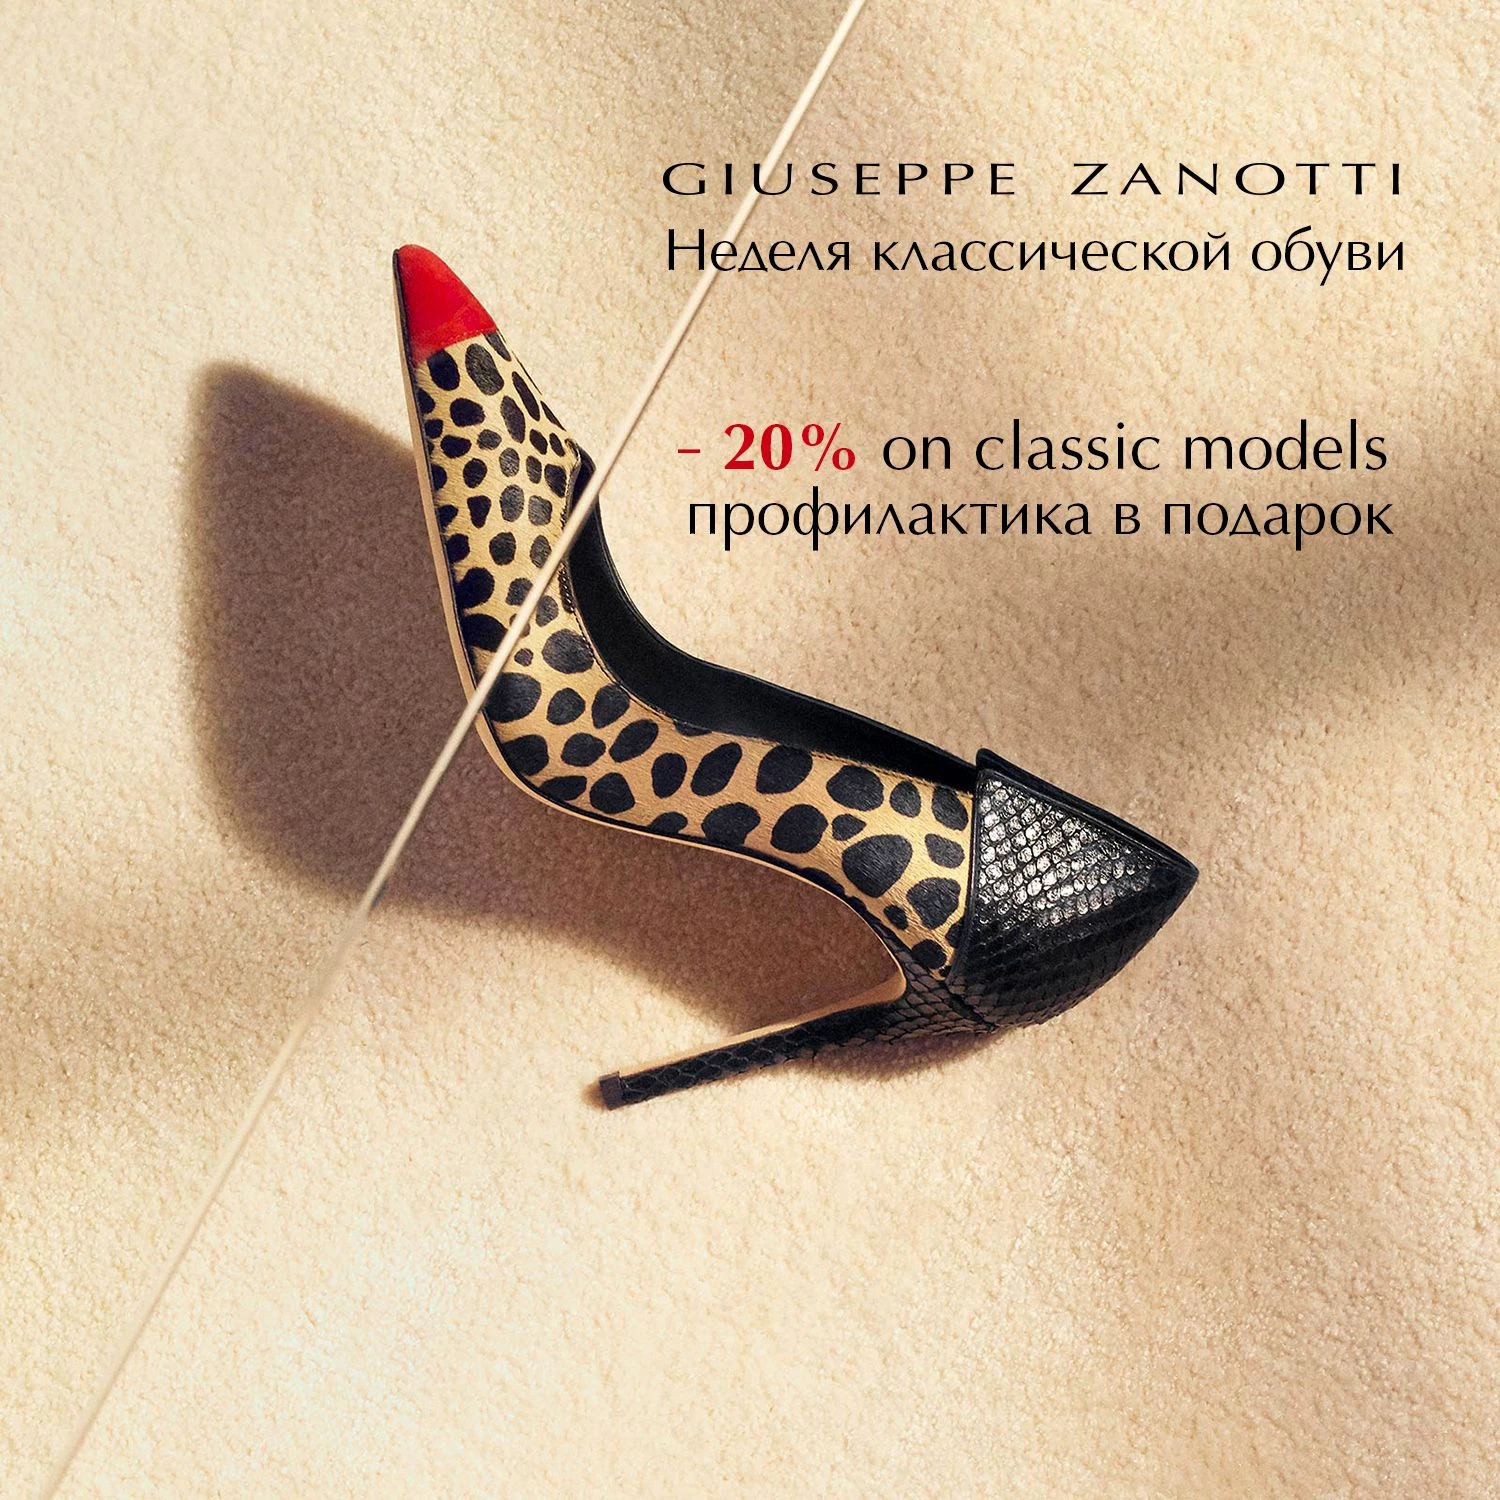 Неделя классической обуви в бутике GIUSEPPE ZANOTTI